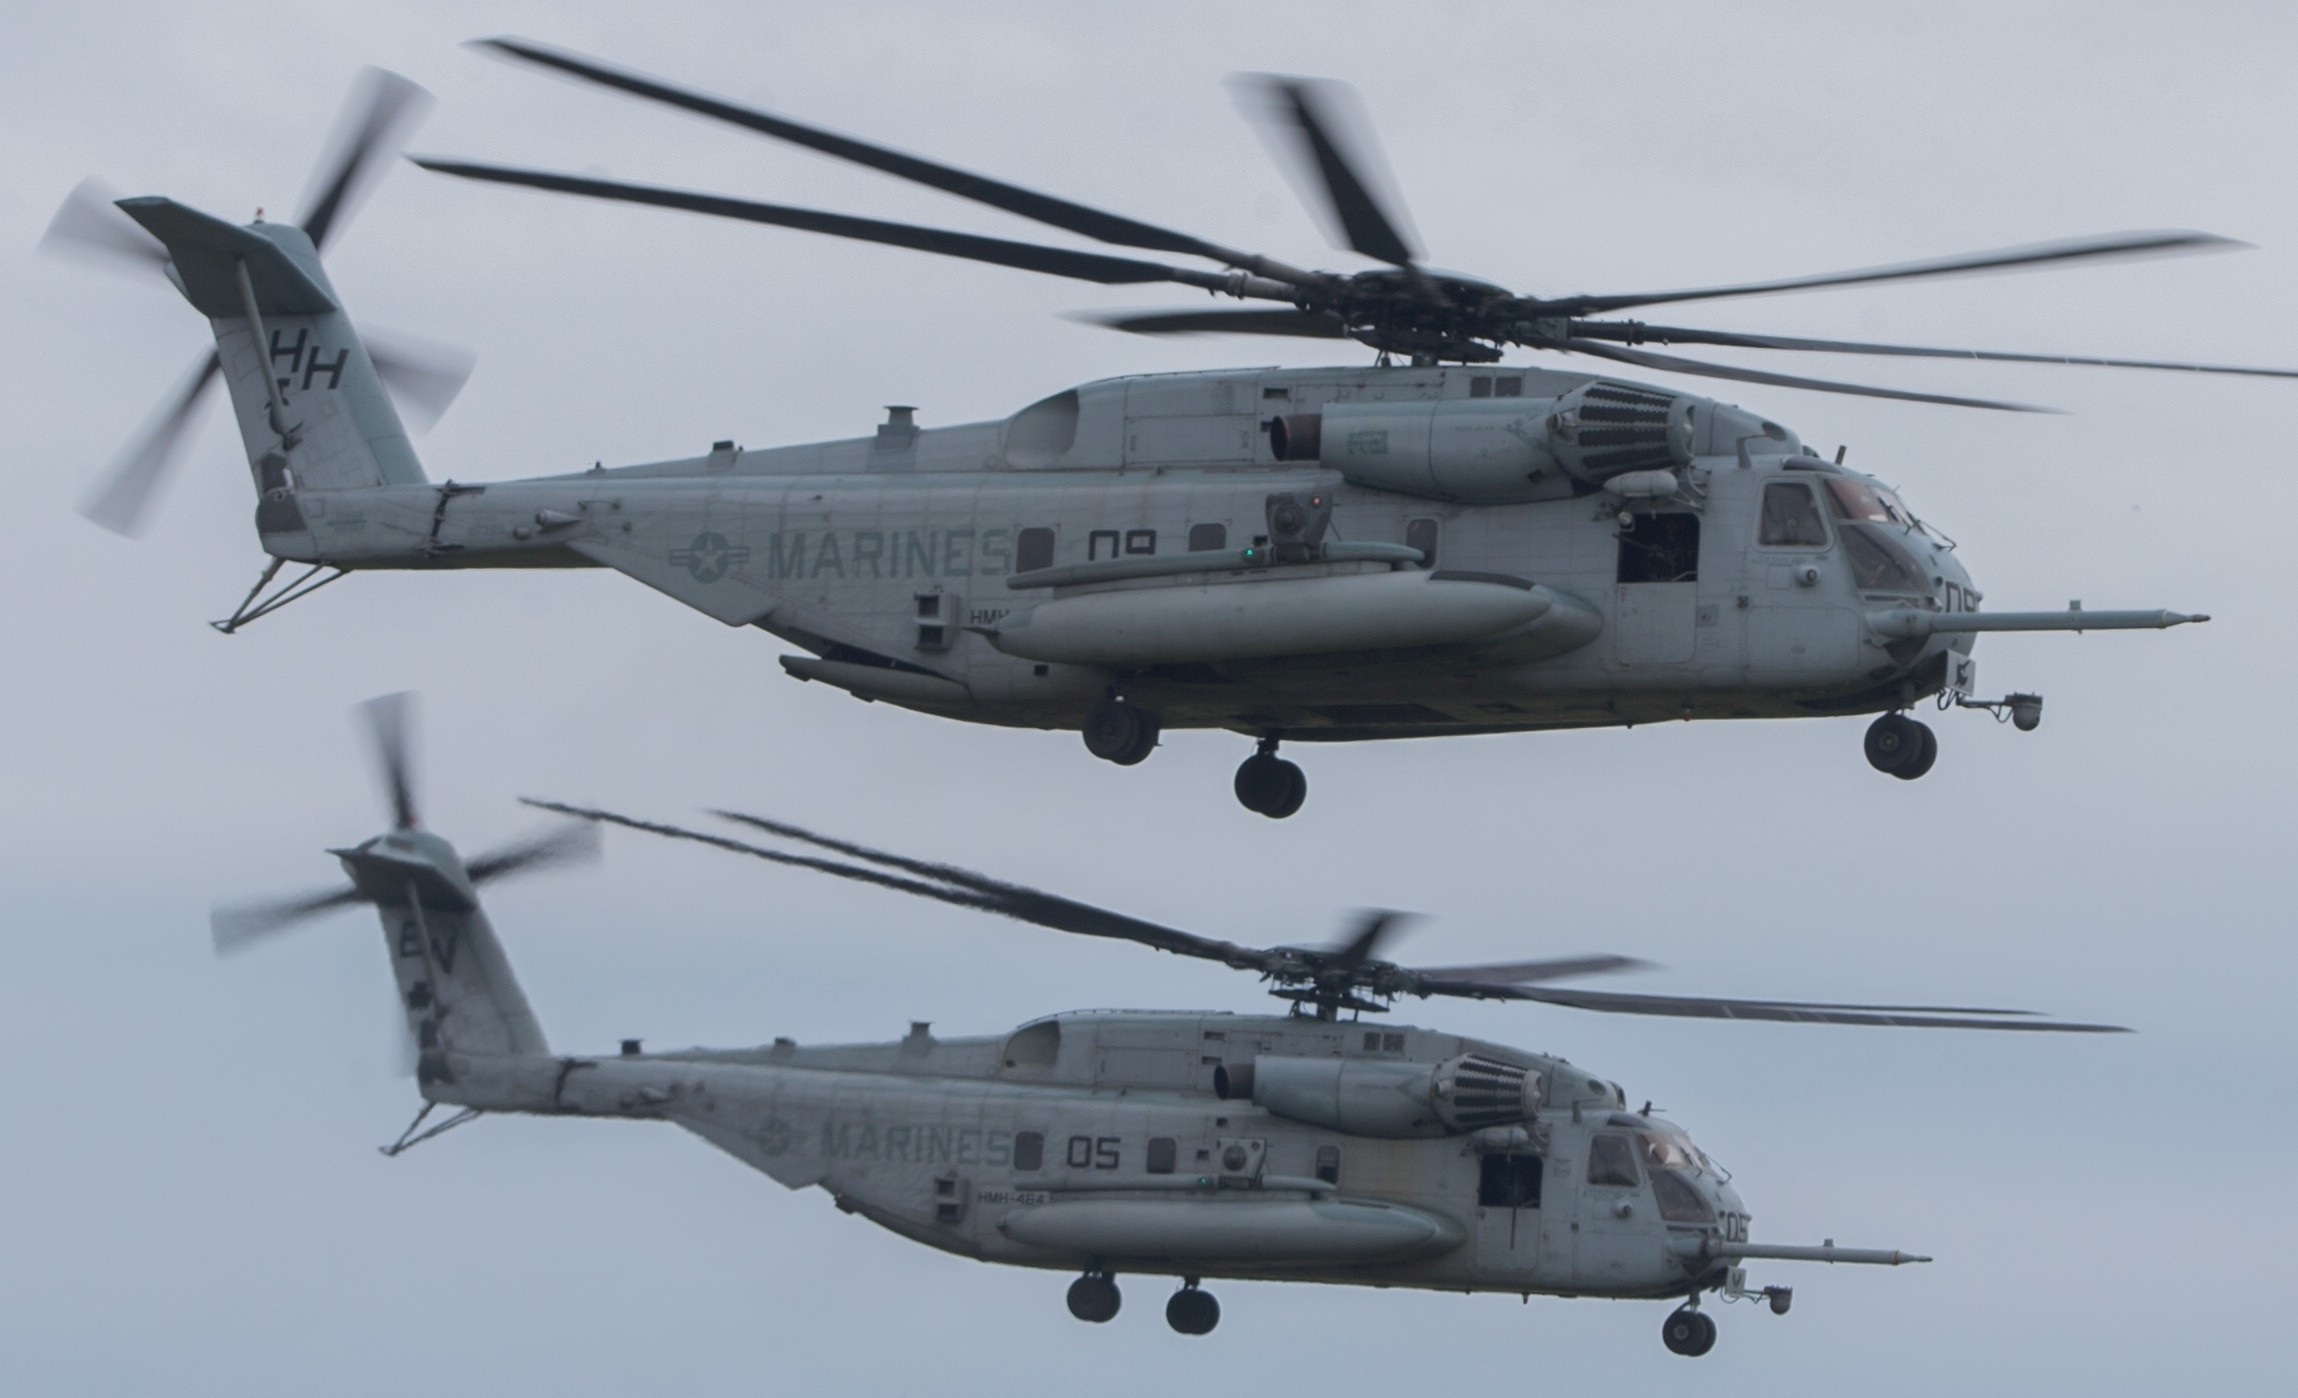 hmh-366 hammerheads marine heavy helicopter squadron usmc sikorsky ch-53e super stallion 91